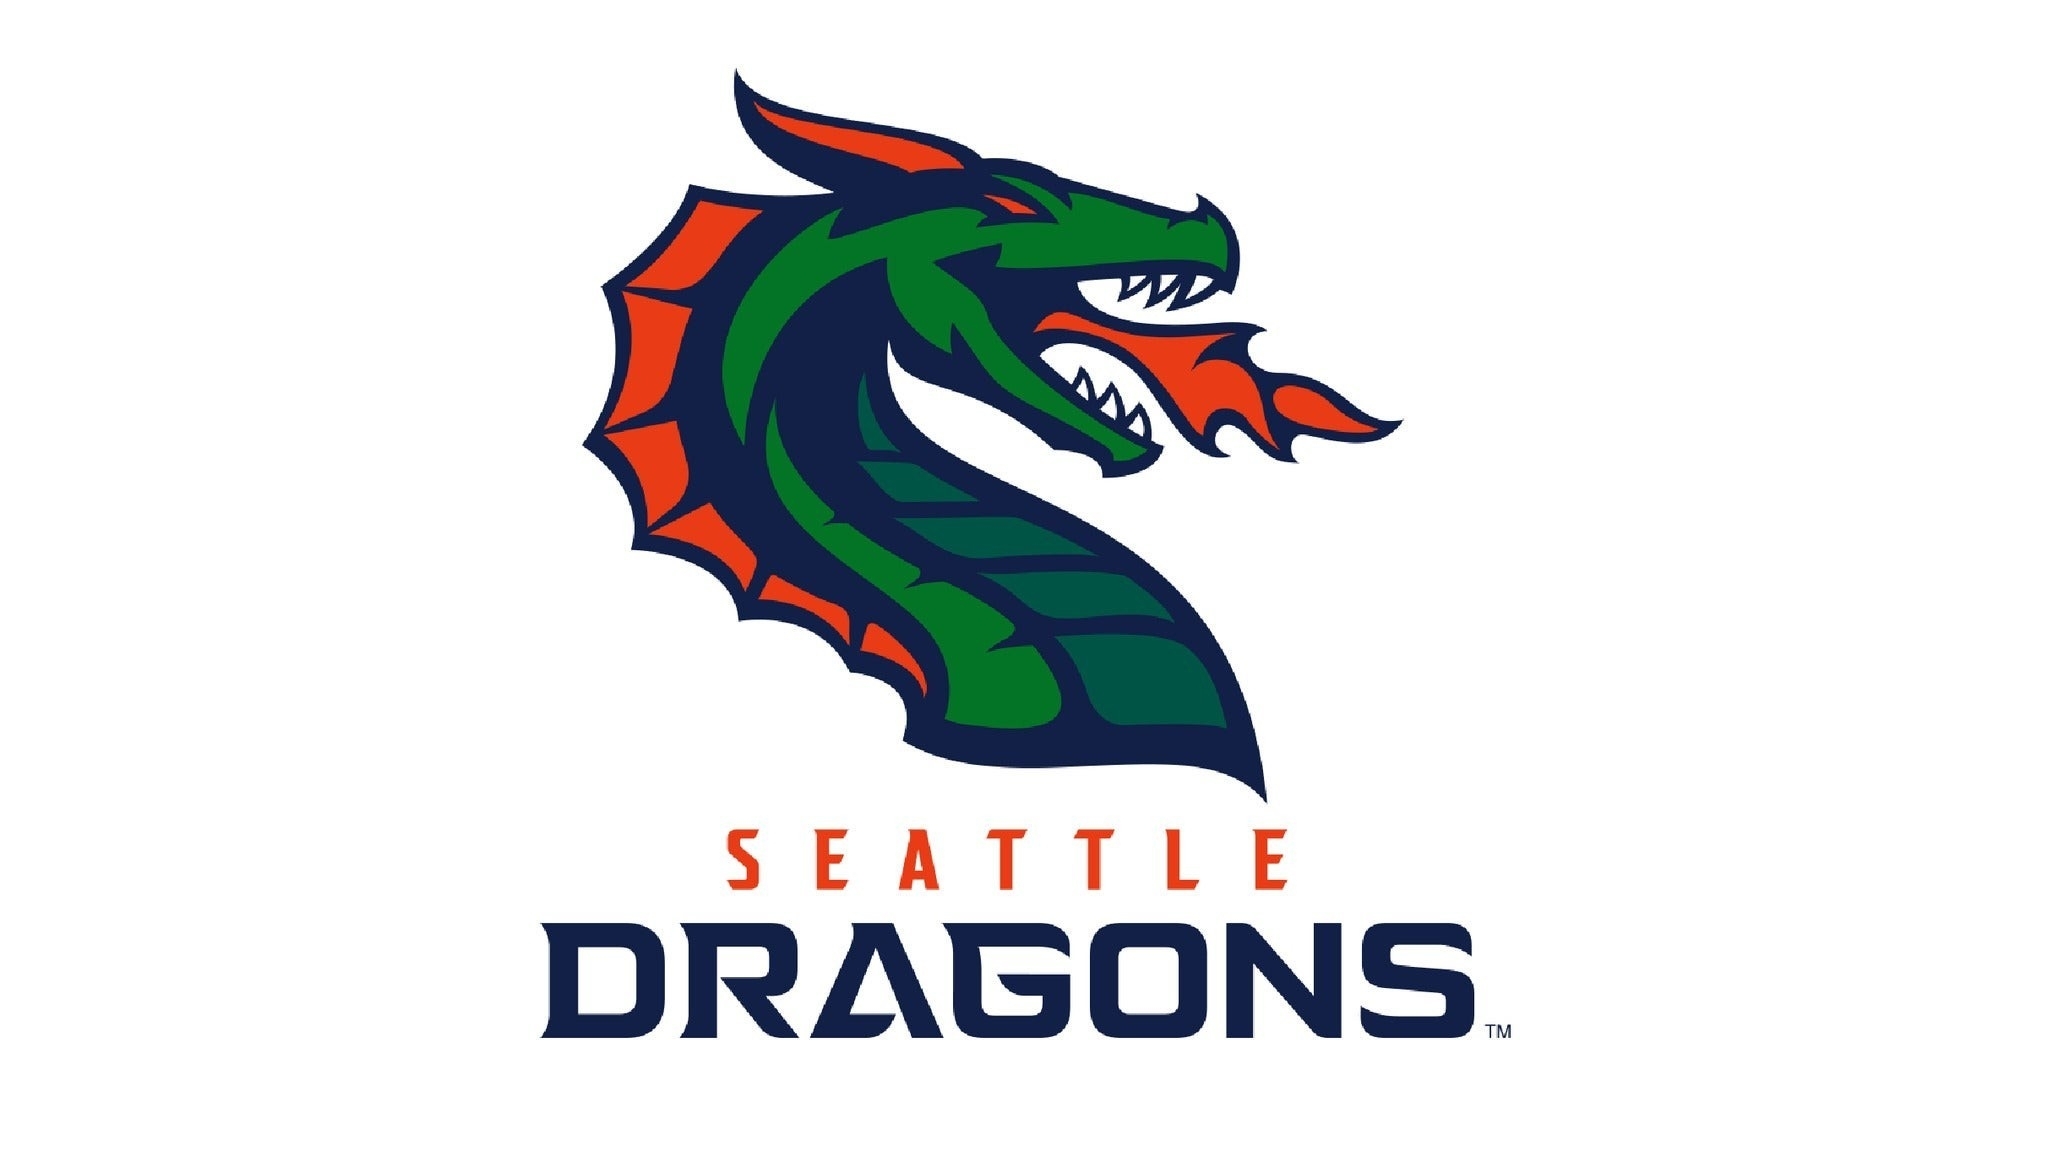 Seattle Dragons Xfl 2020 Season At Centurylink Field In